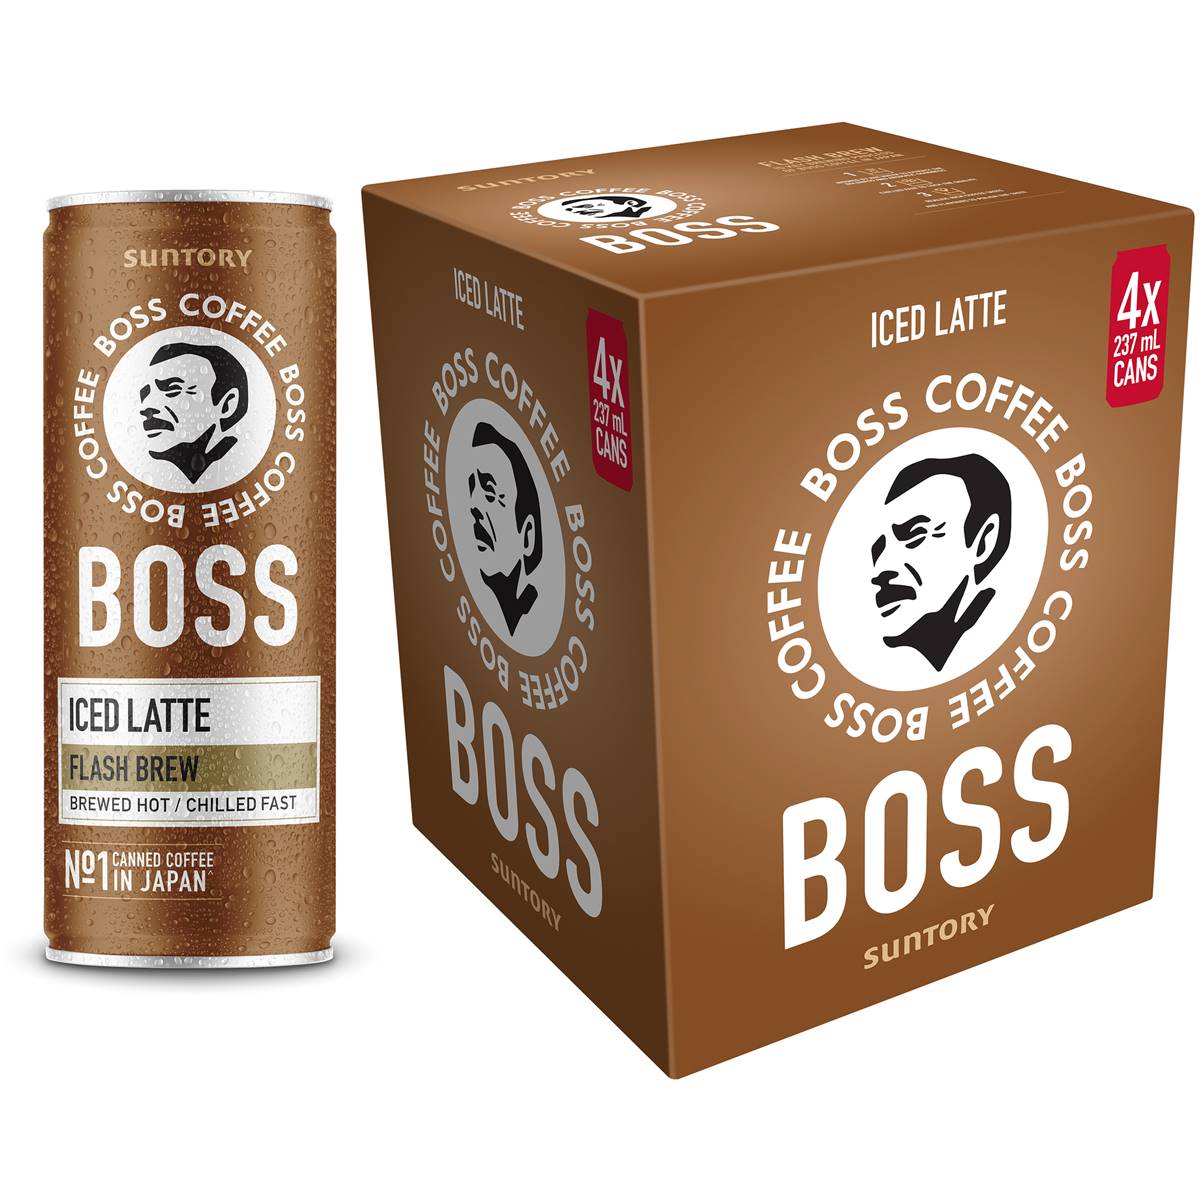 Boss Coffee Iced Latte 4 x 237ml